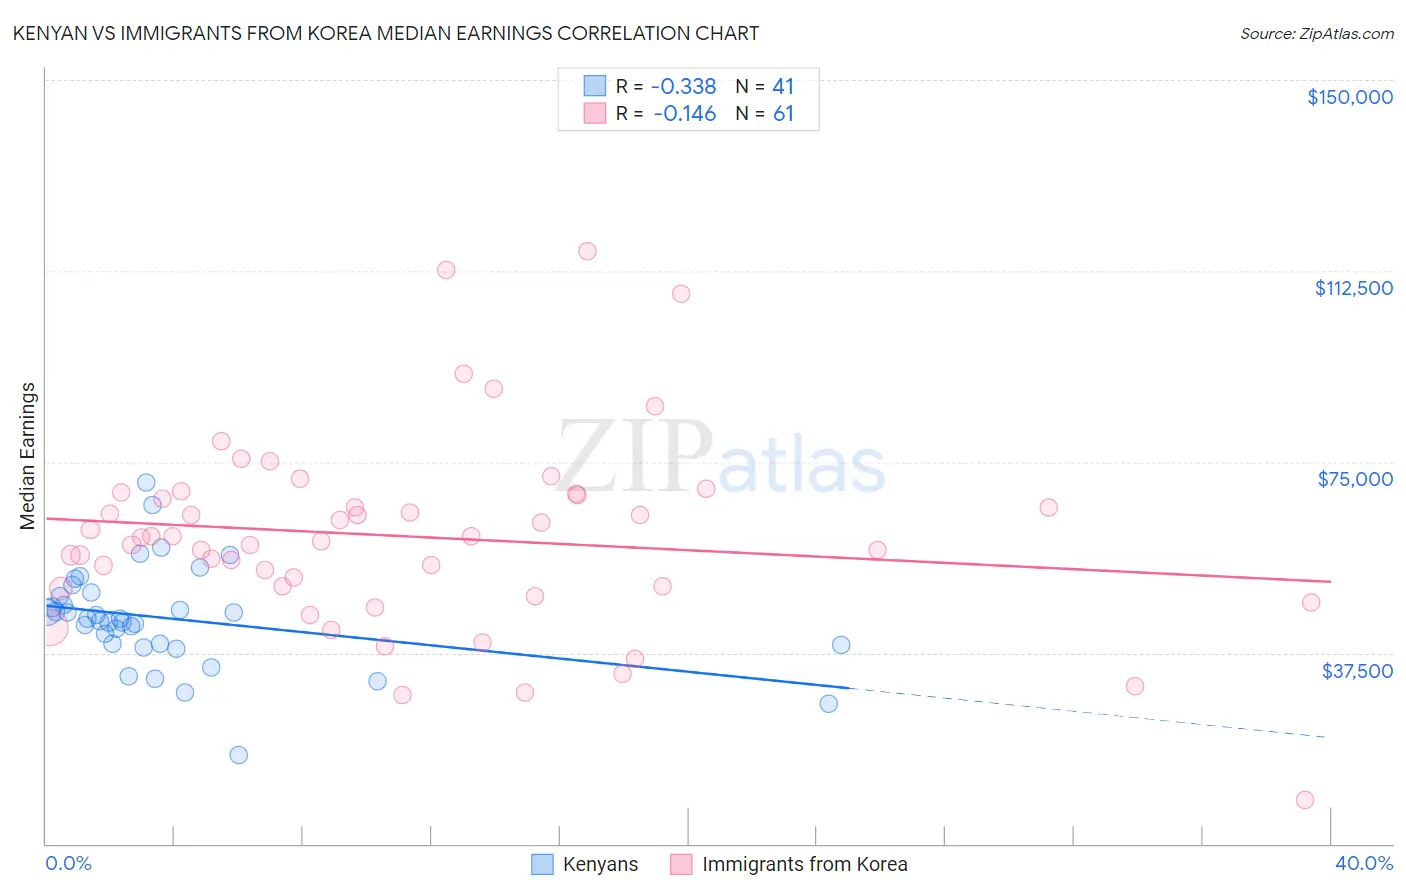 Kenyan vs Immigrants from Korea Median Earnings